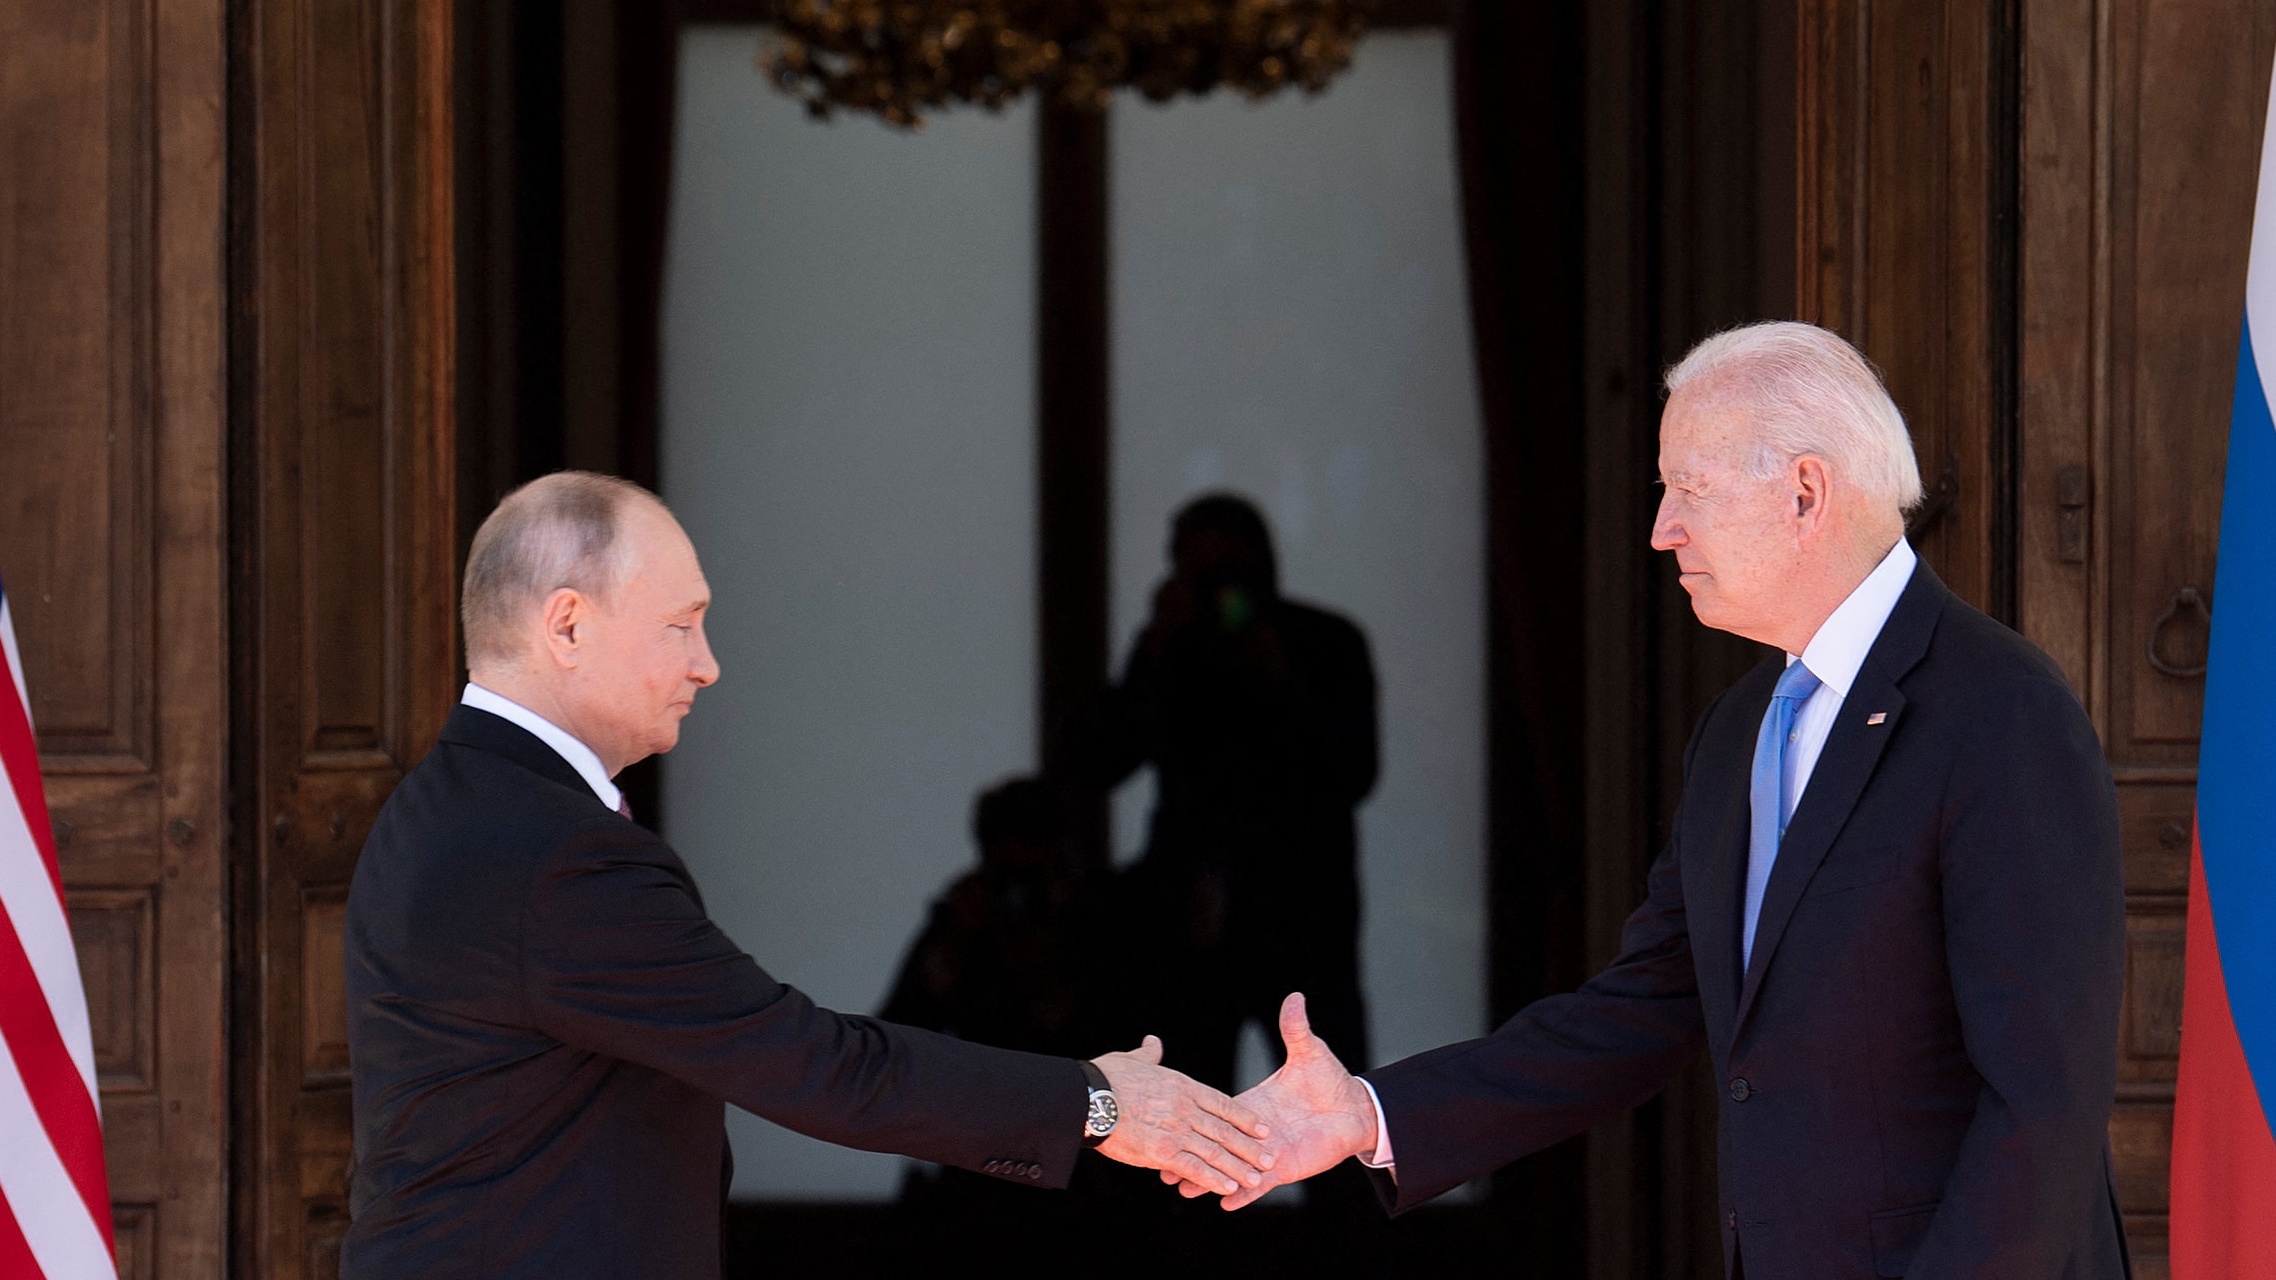 Vladimir Putin and Joe Biden shake hands ahead of a summit in Geneva, Switzerland in June